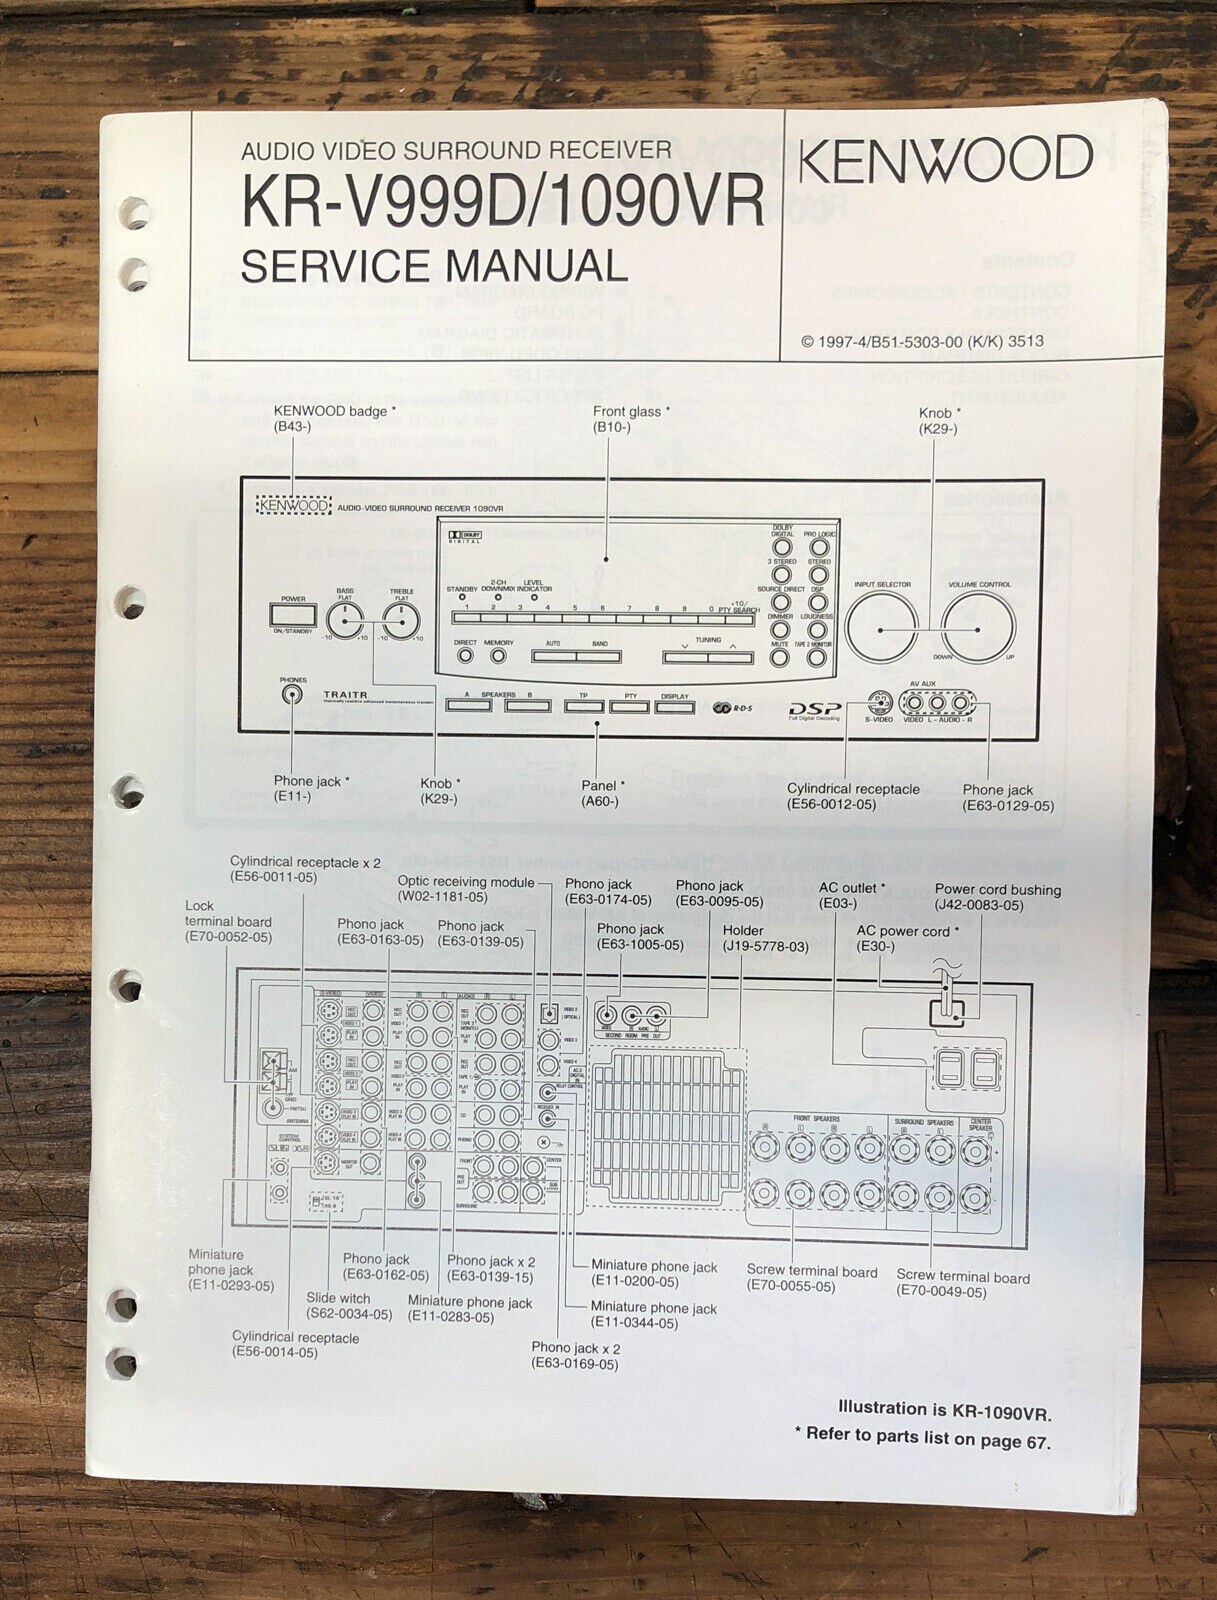 Used Kenwood KR-V999D Surround sound receivers for Sale